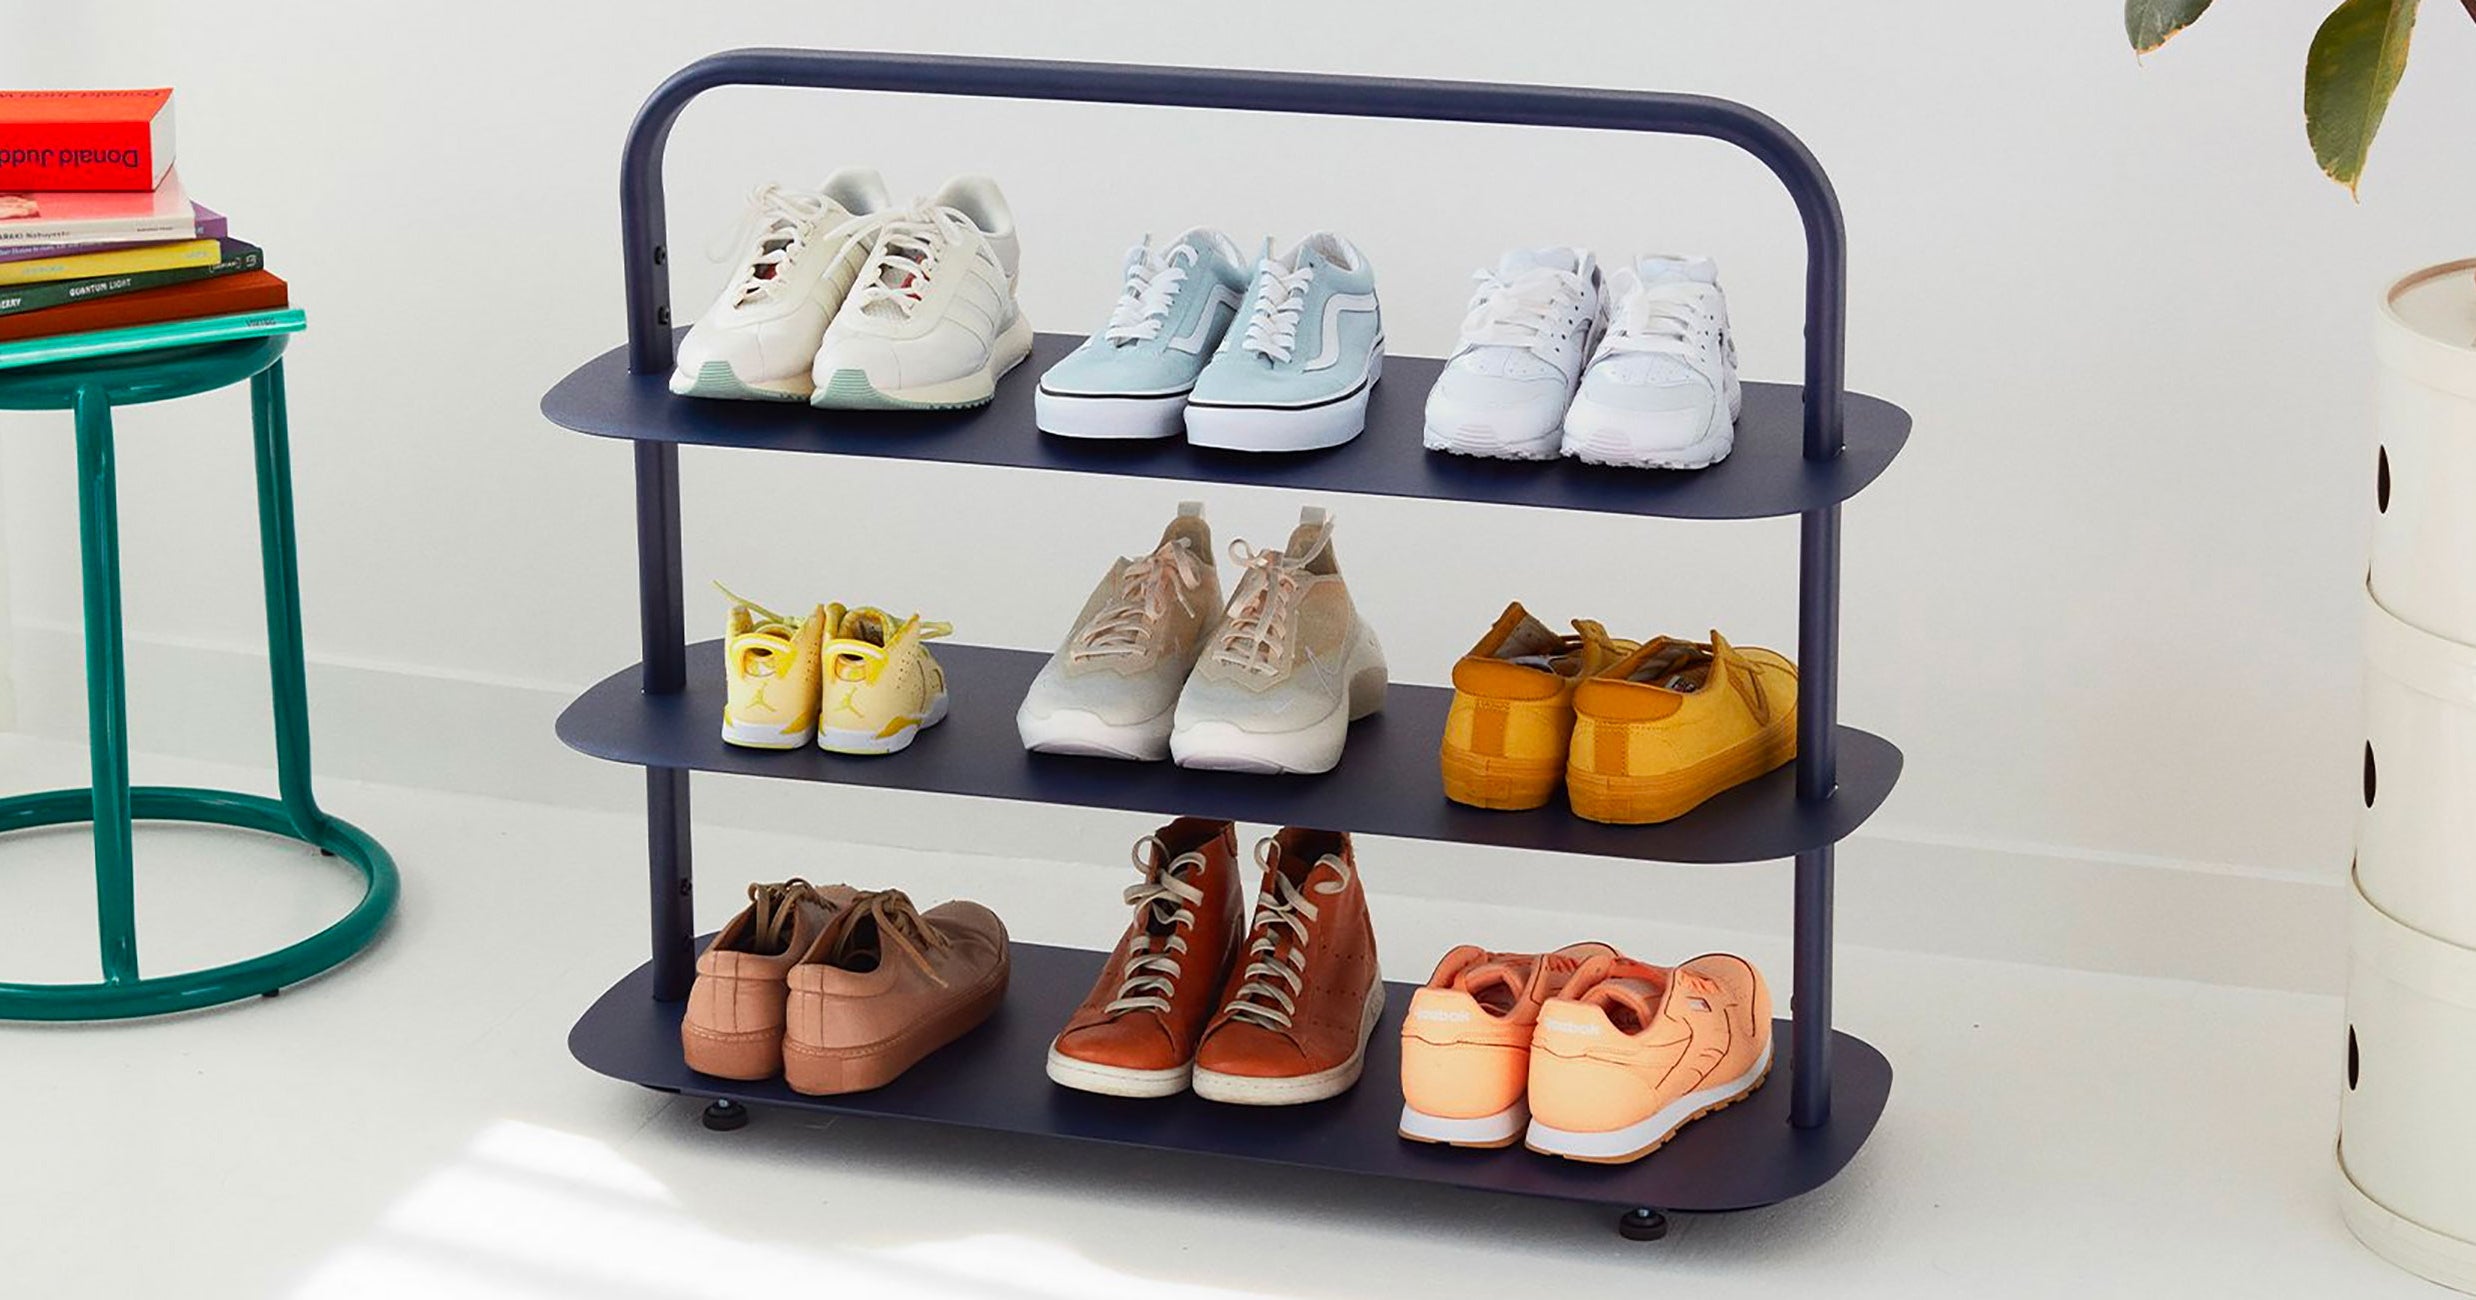 21 Best Shoe Storage Ideas in 2023, According to a Storage Expert